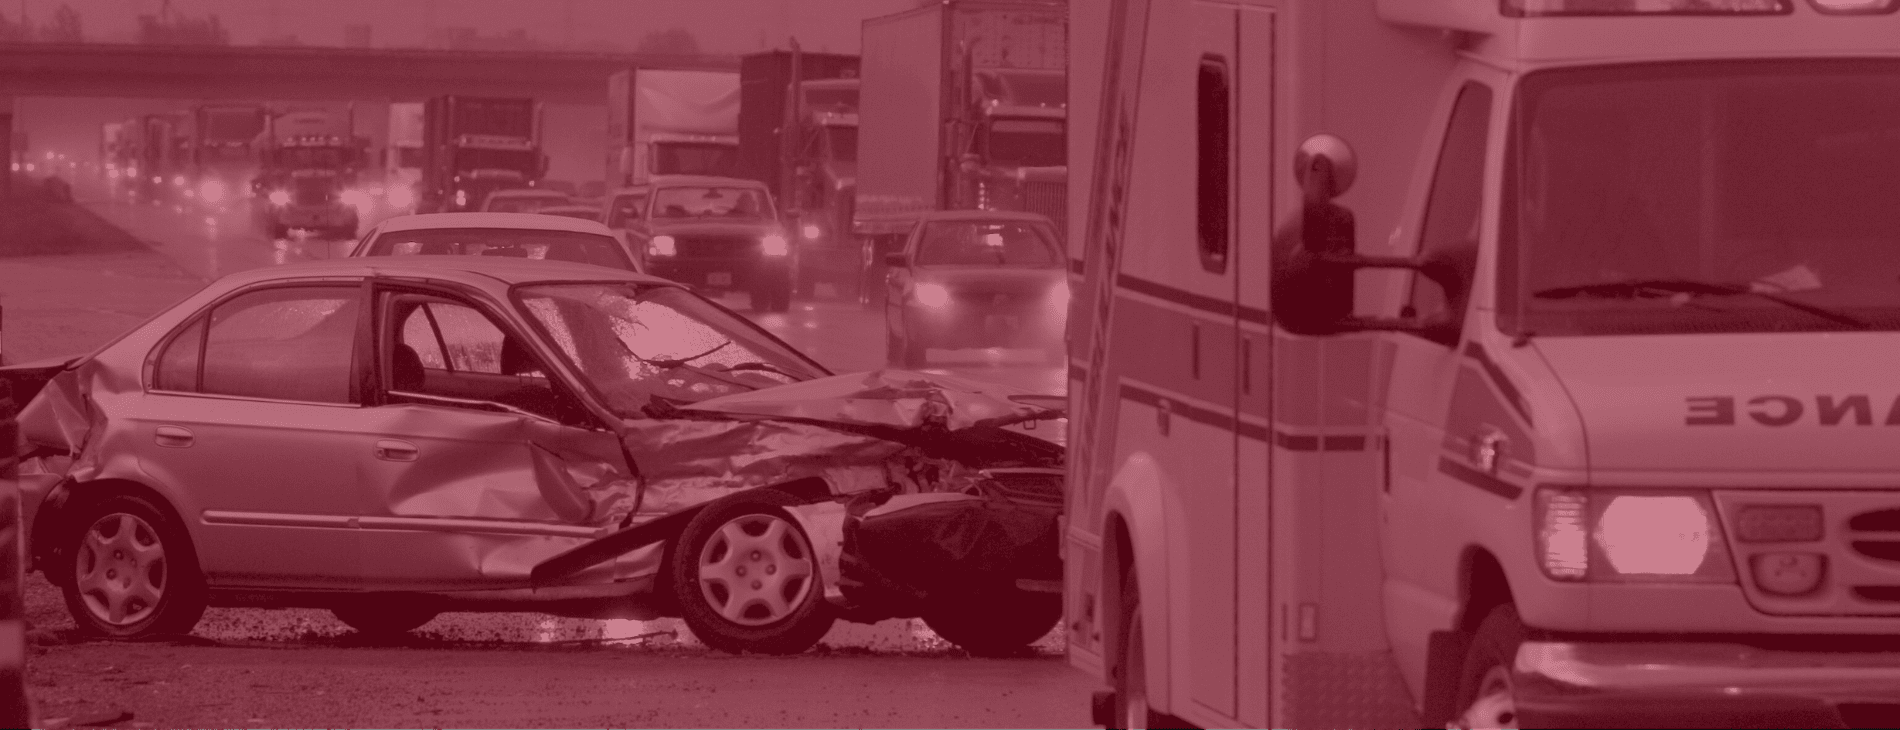 Redondo Beach Car Crash Killed One Woman (4)